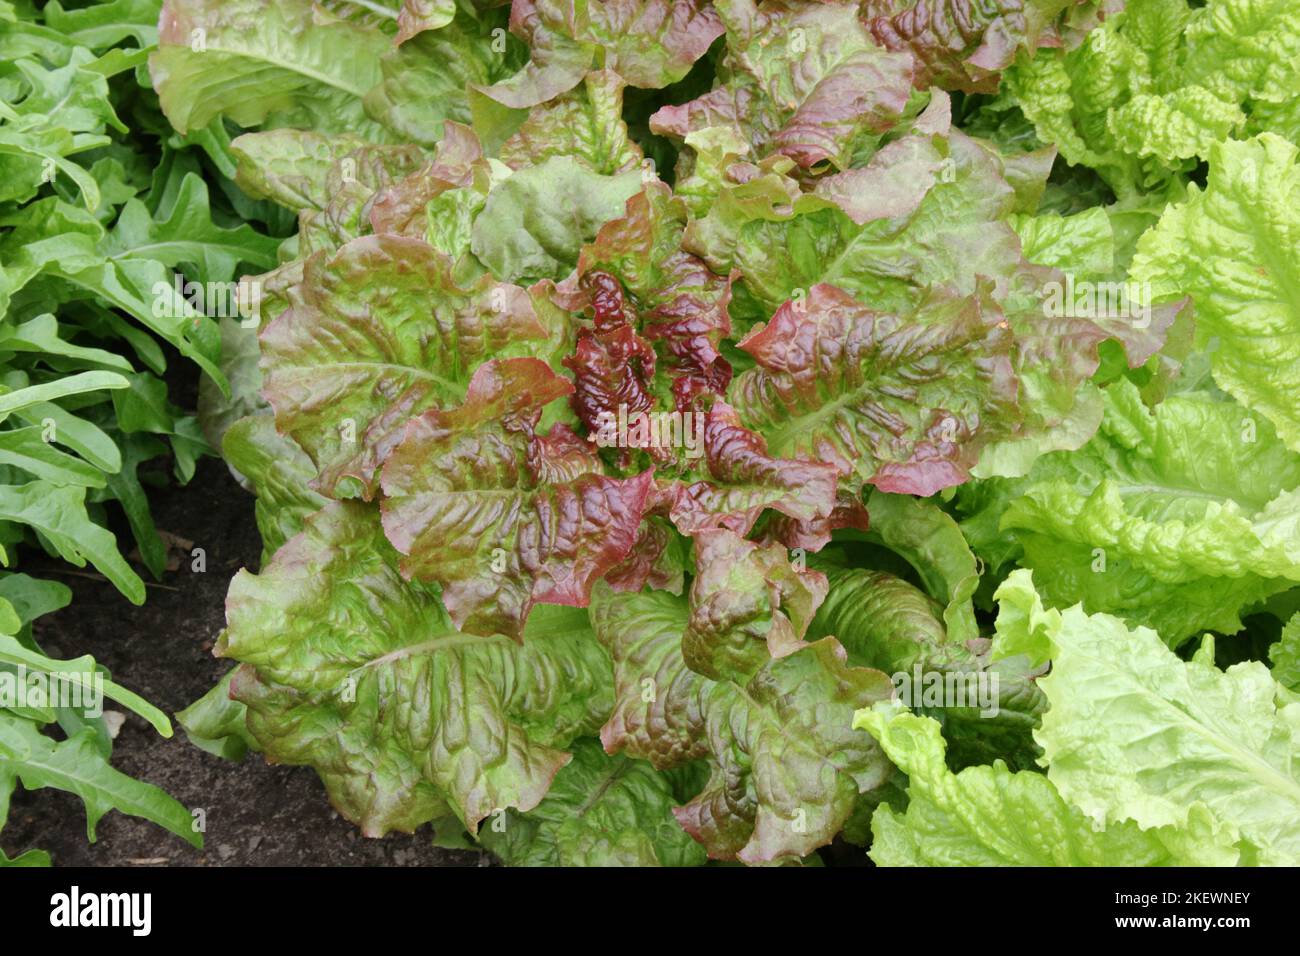 Picking lettuce 'Amerikanischer Brauner' in garden. Stock Photo